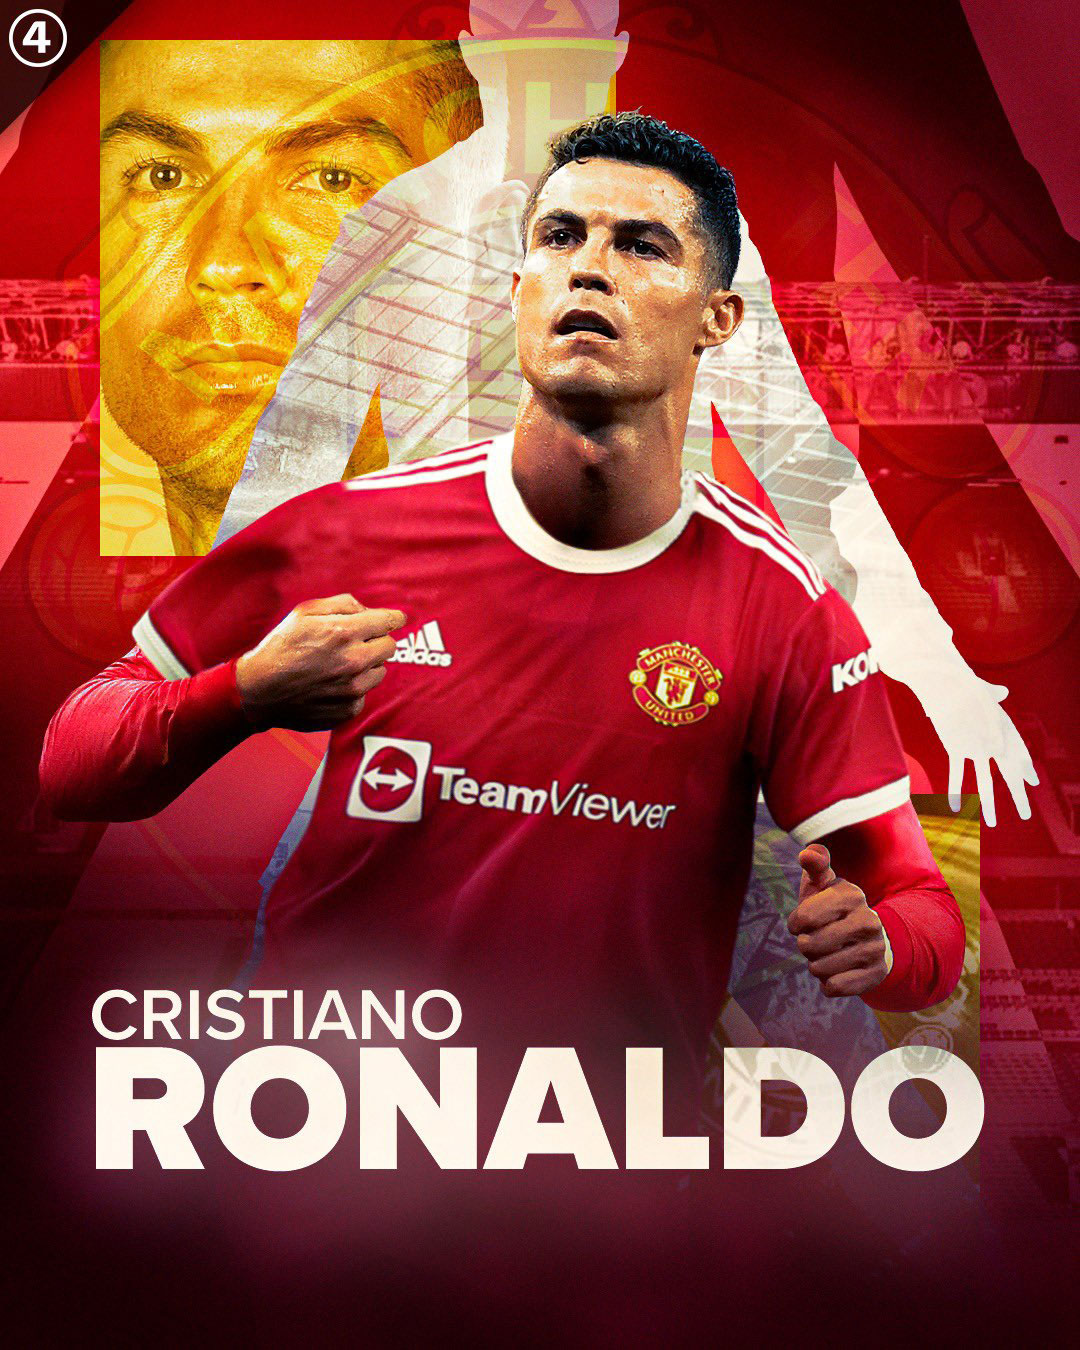 Ronaldo Wallpaper Hd Mobile - Wallpaperforu